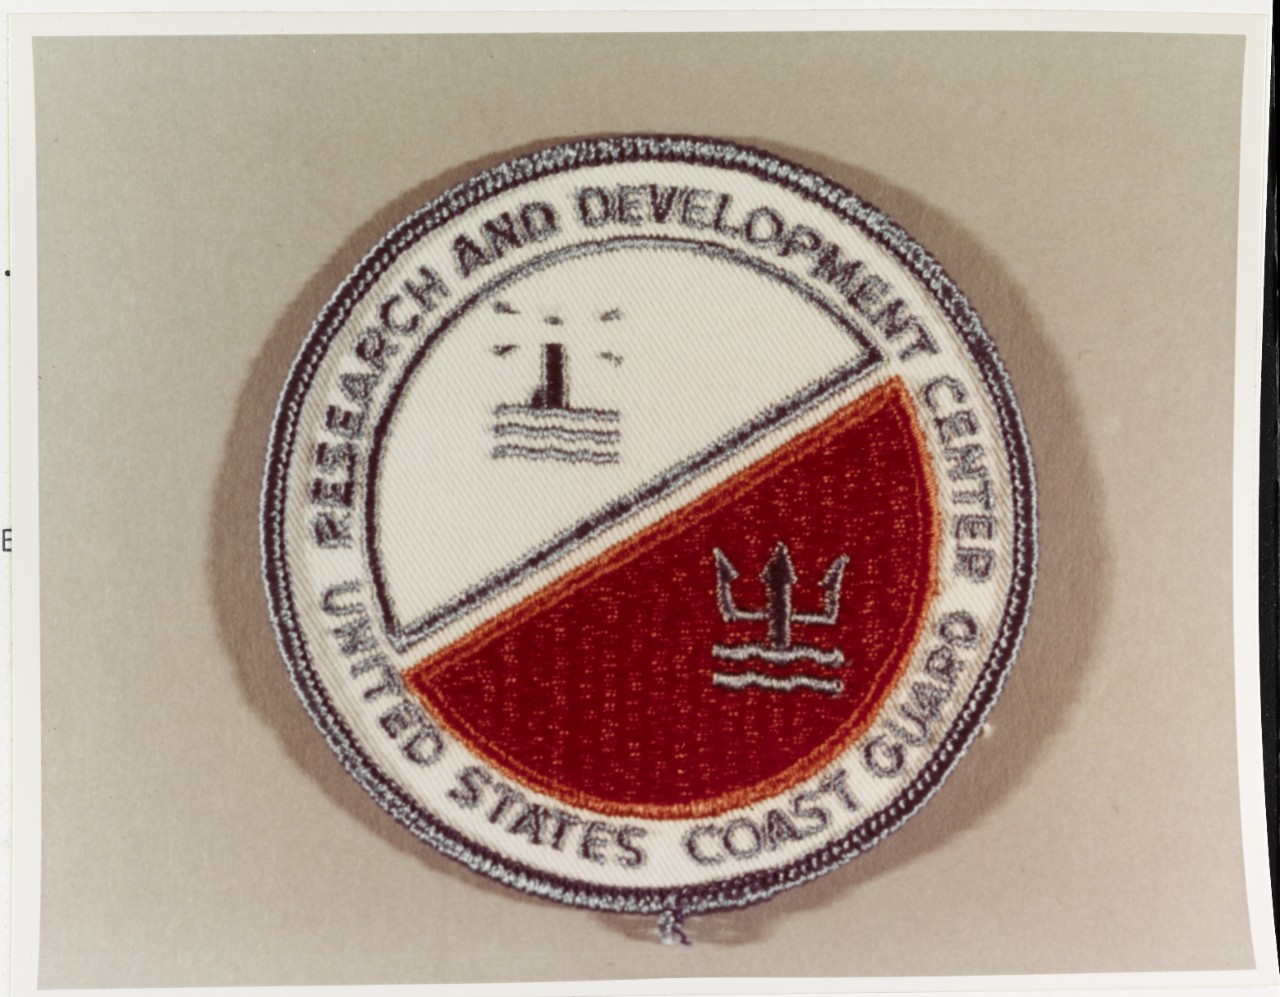 Insignia:  U.S. Coast Guard Research and Development Center, New London, Connecticut